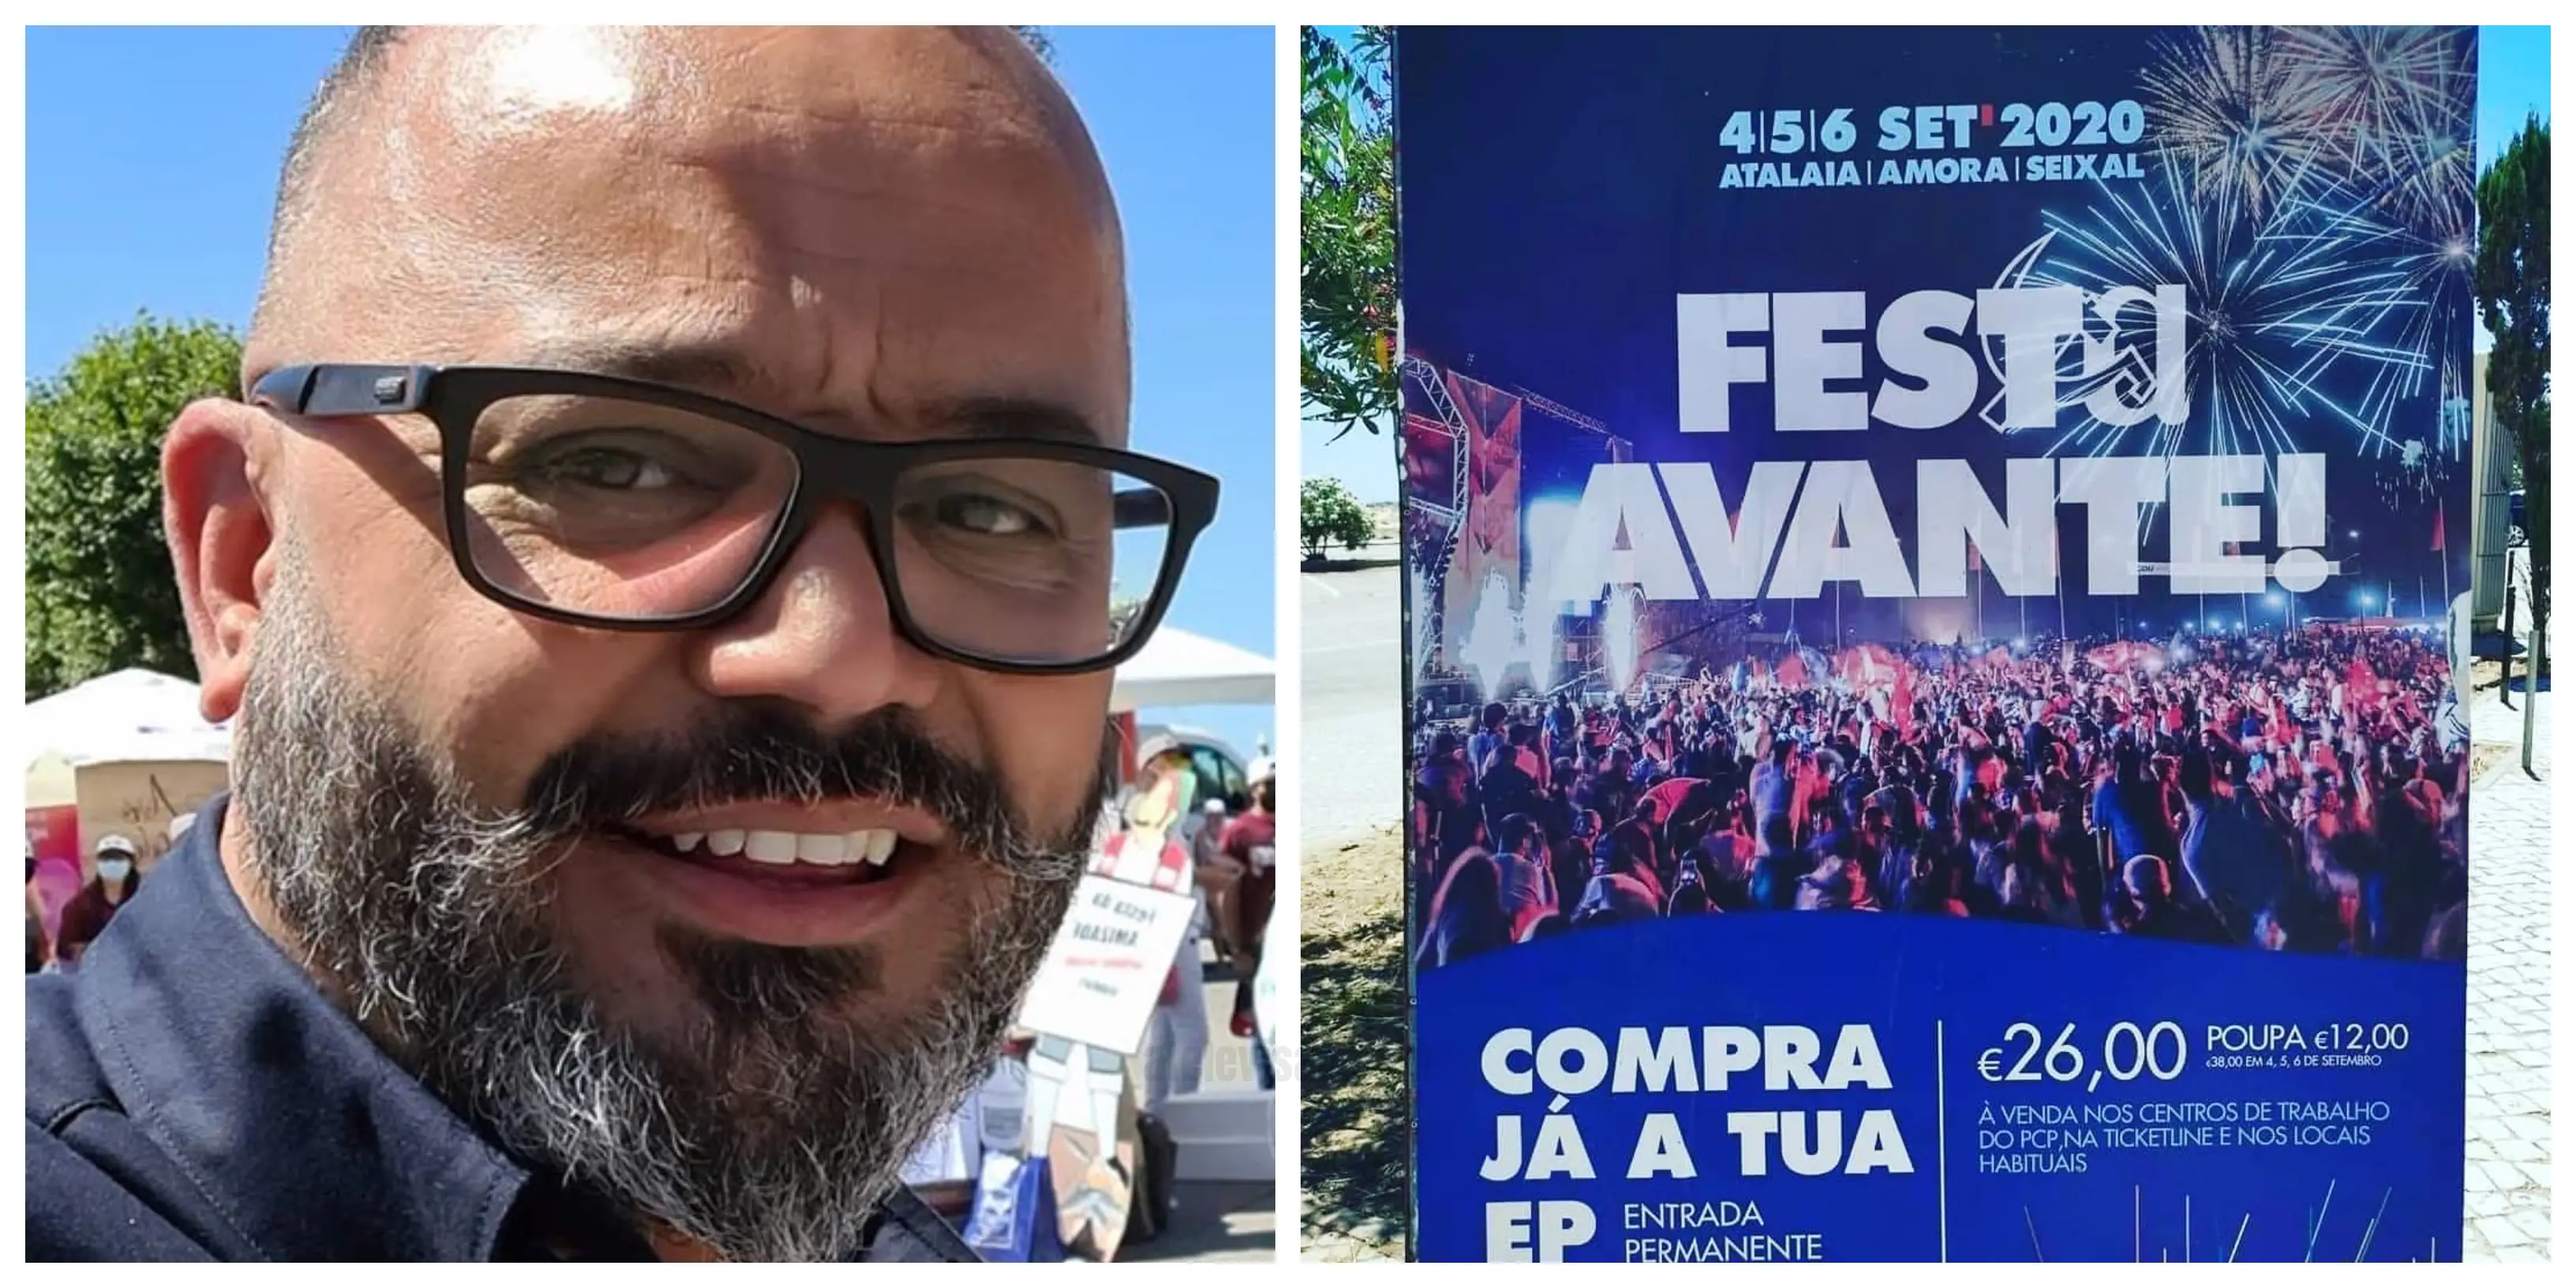 Fernando-Rocha-Festa-Avante